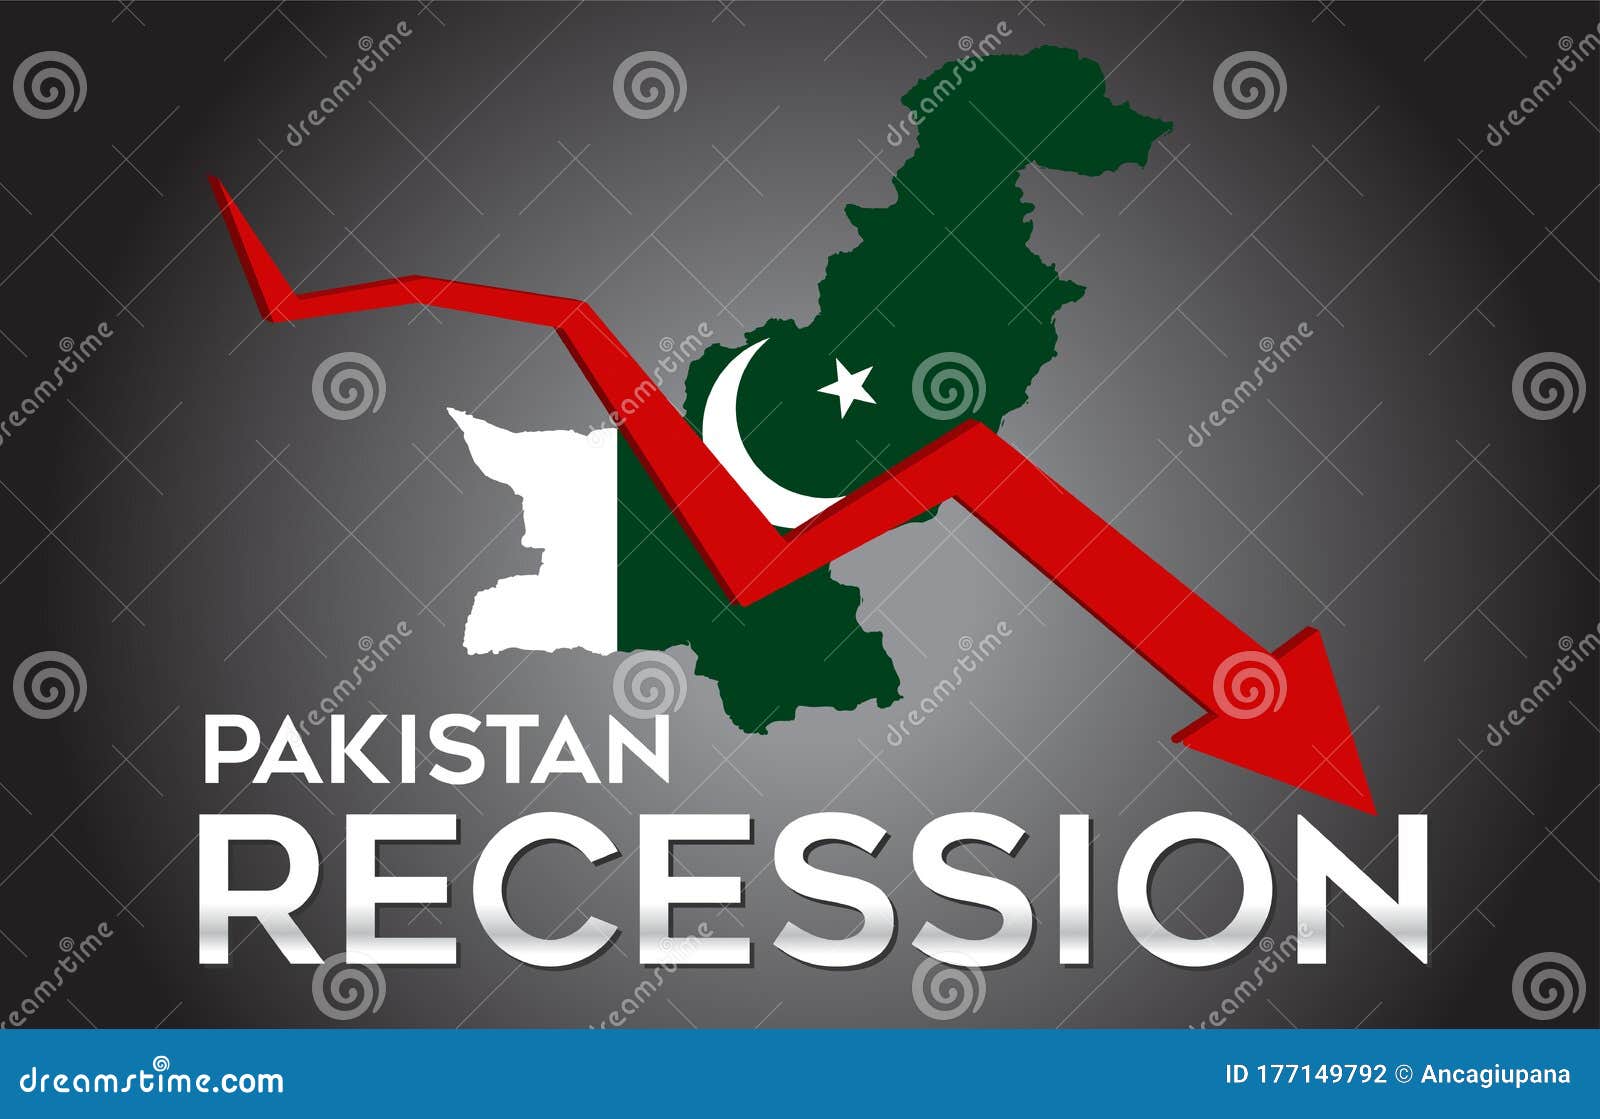 presentation on economic crisis in pakistan